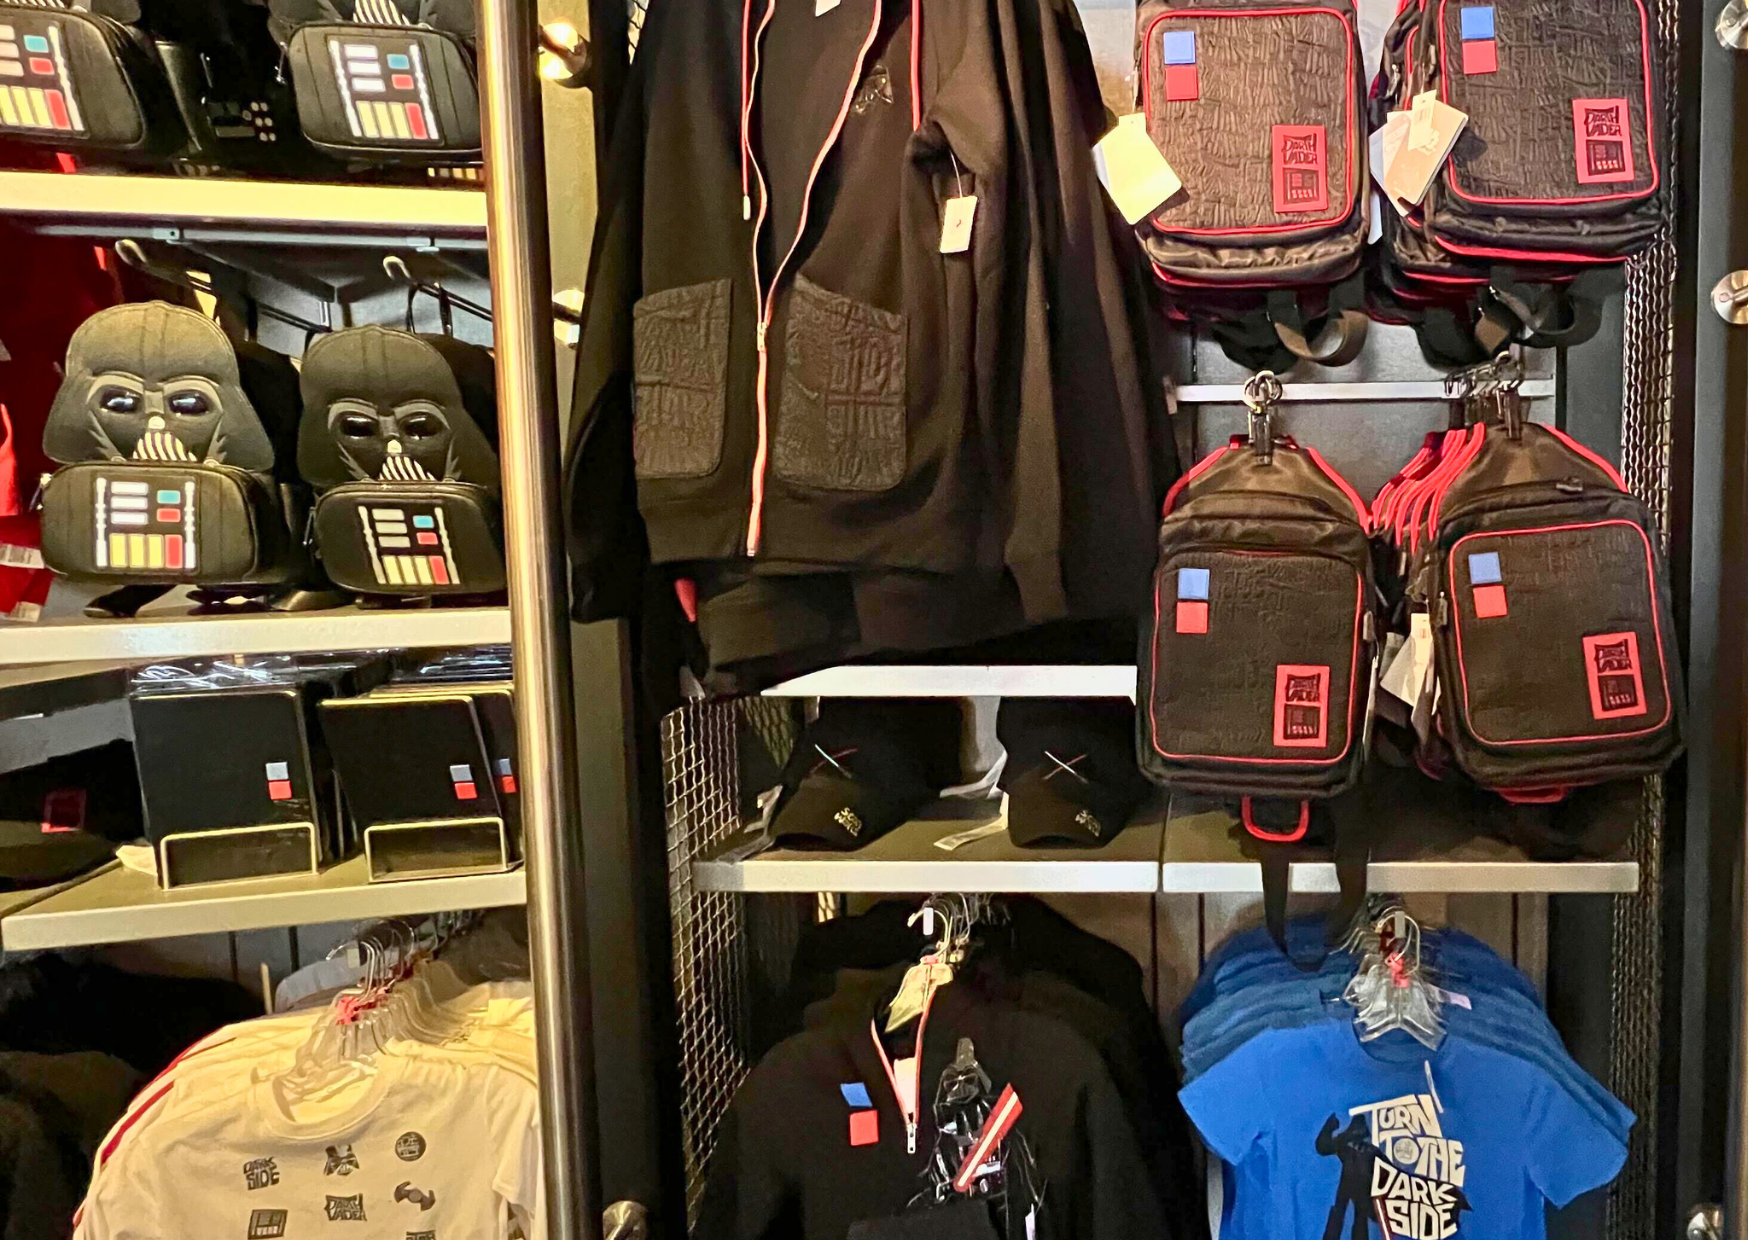 Wall of 'Star Wars' merchandise